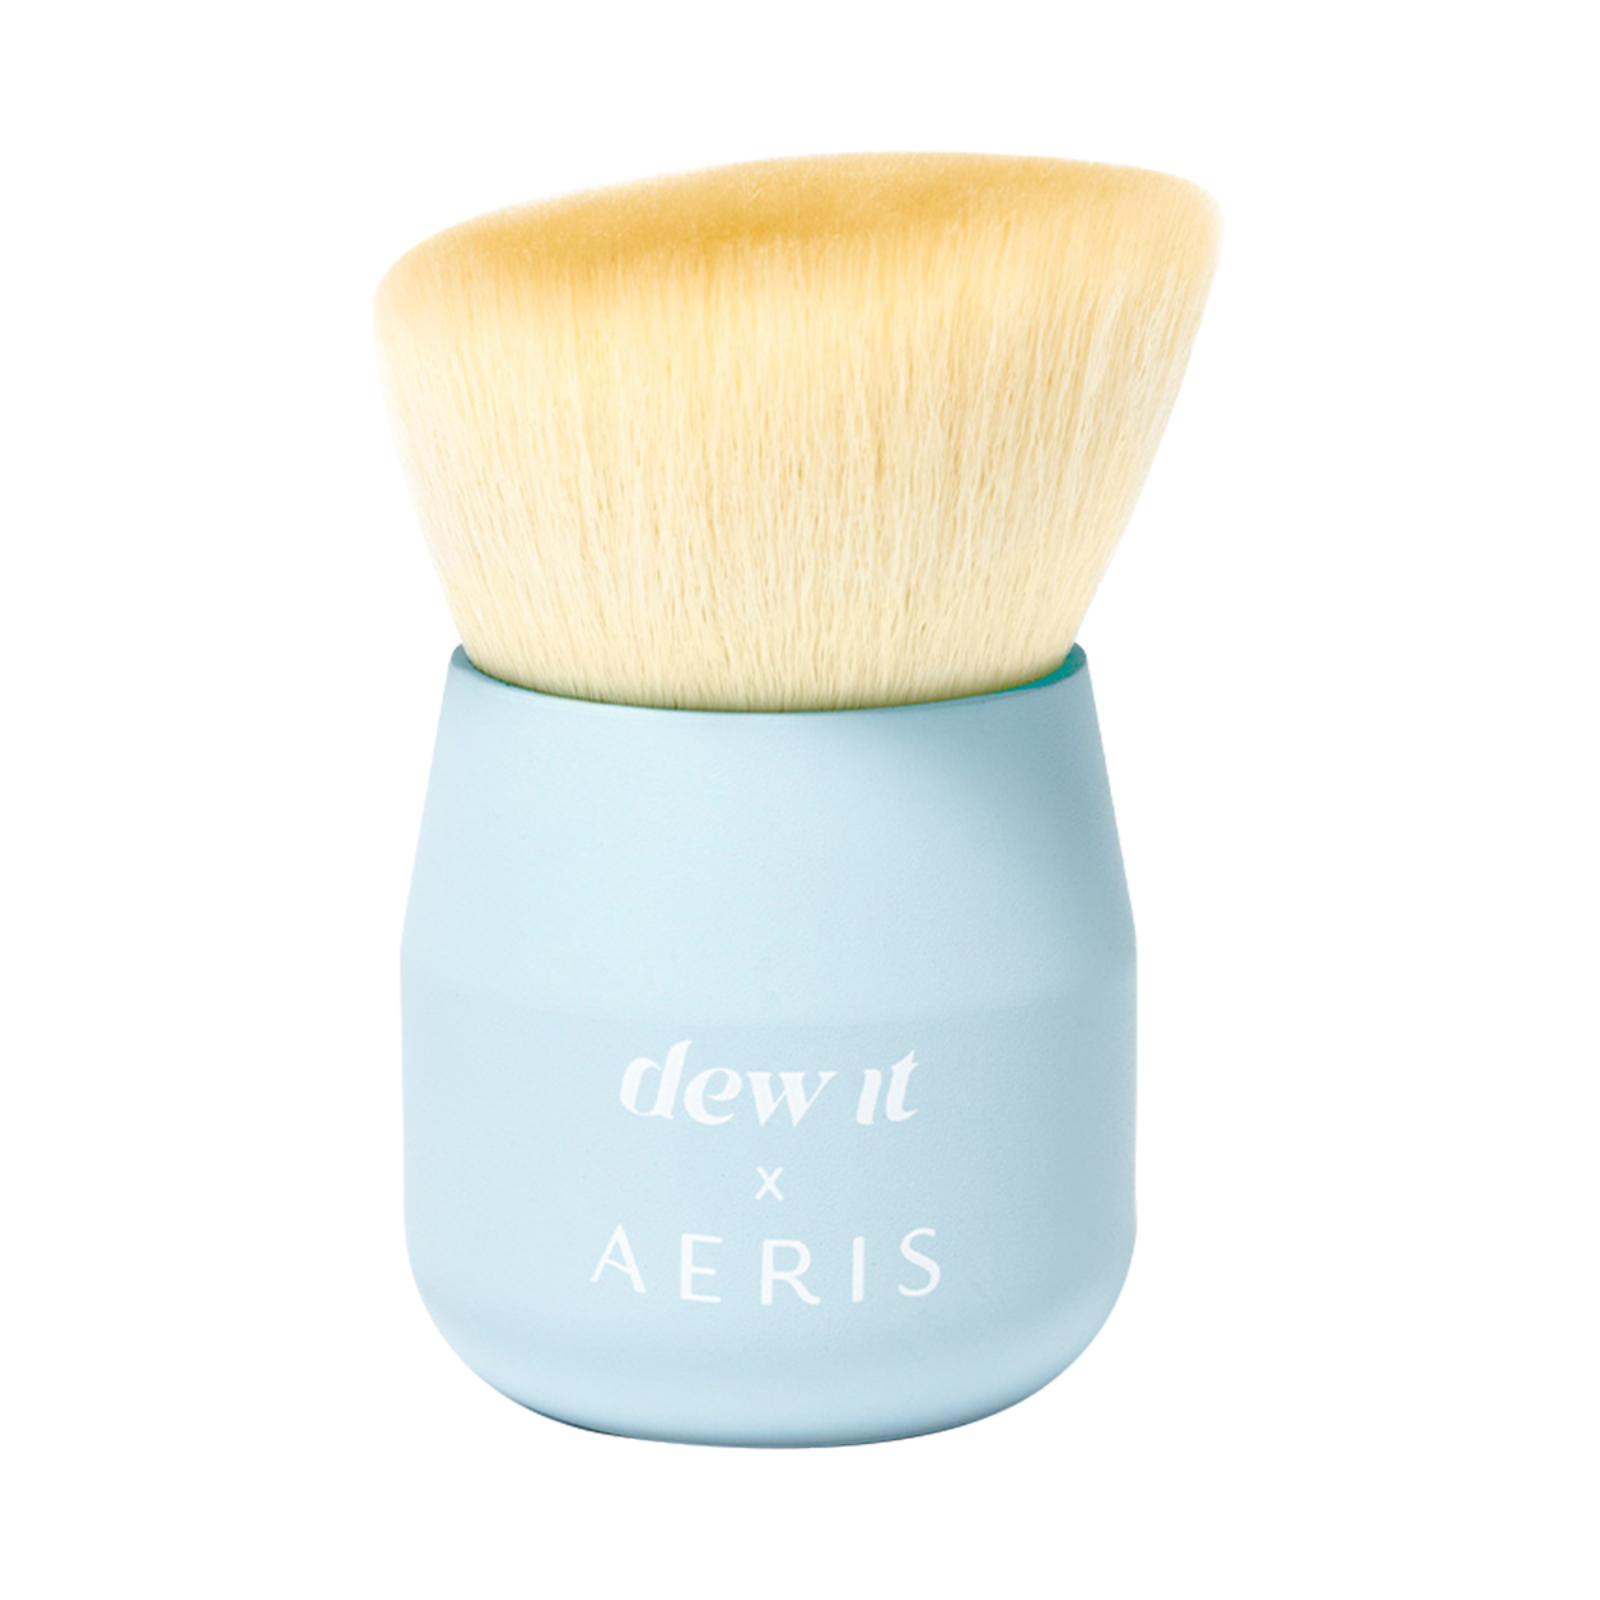 Dew It x Aeris Body Brush | Review Marsha Beauty